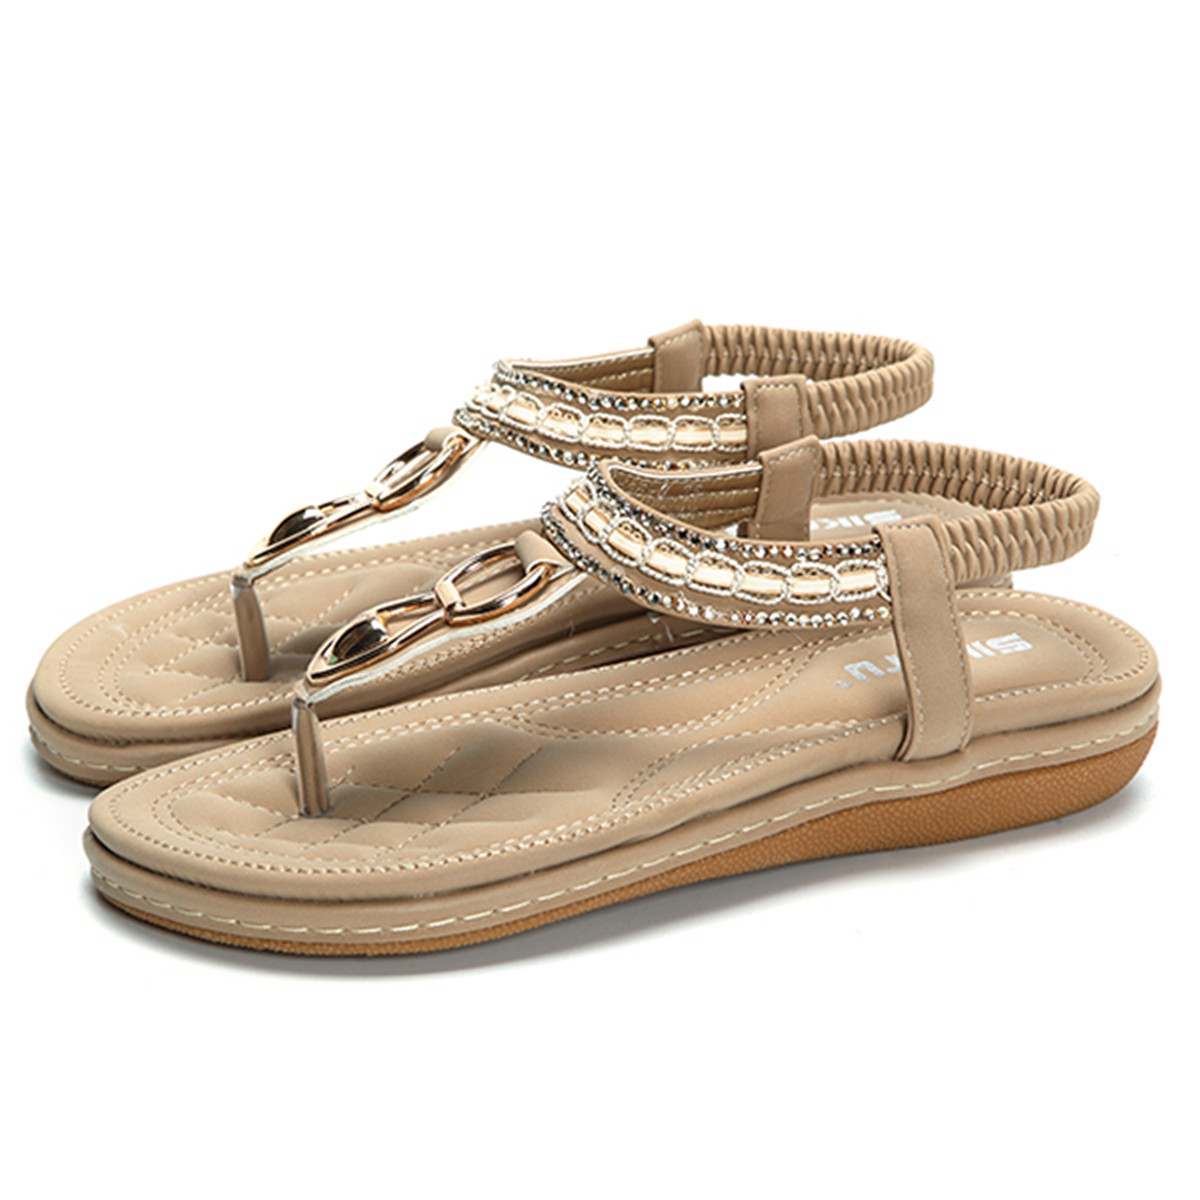 gracosy Bohemian Sandals, Women's Summer Style Clip Toe Metal Flat Flip ...